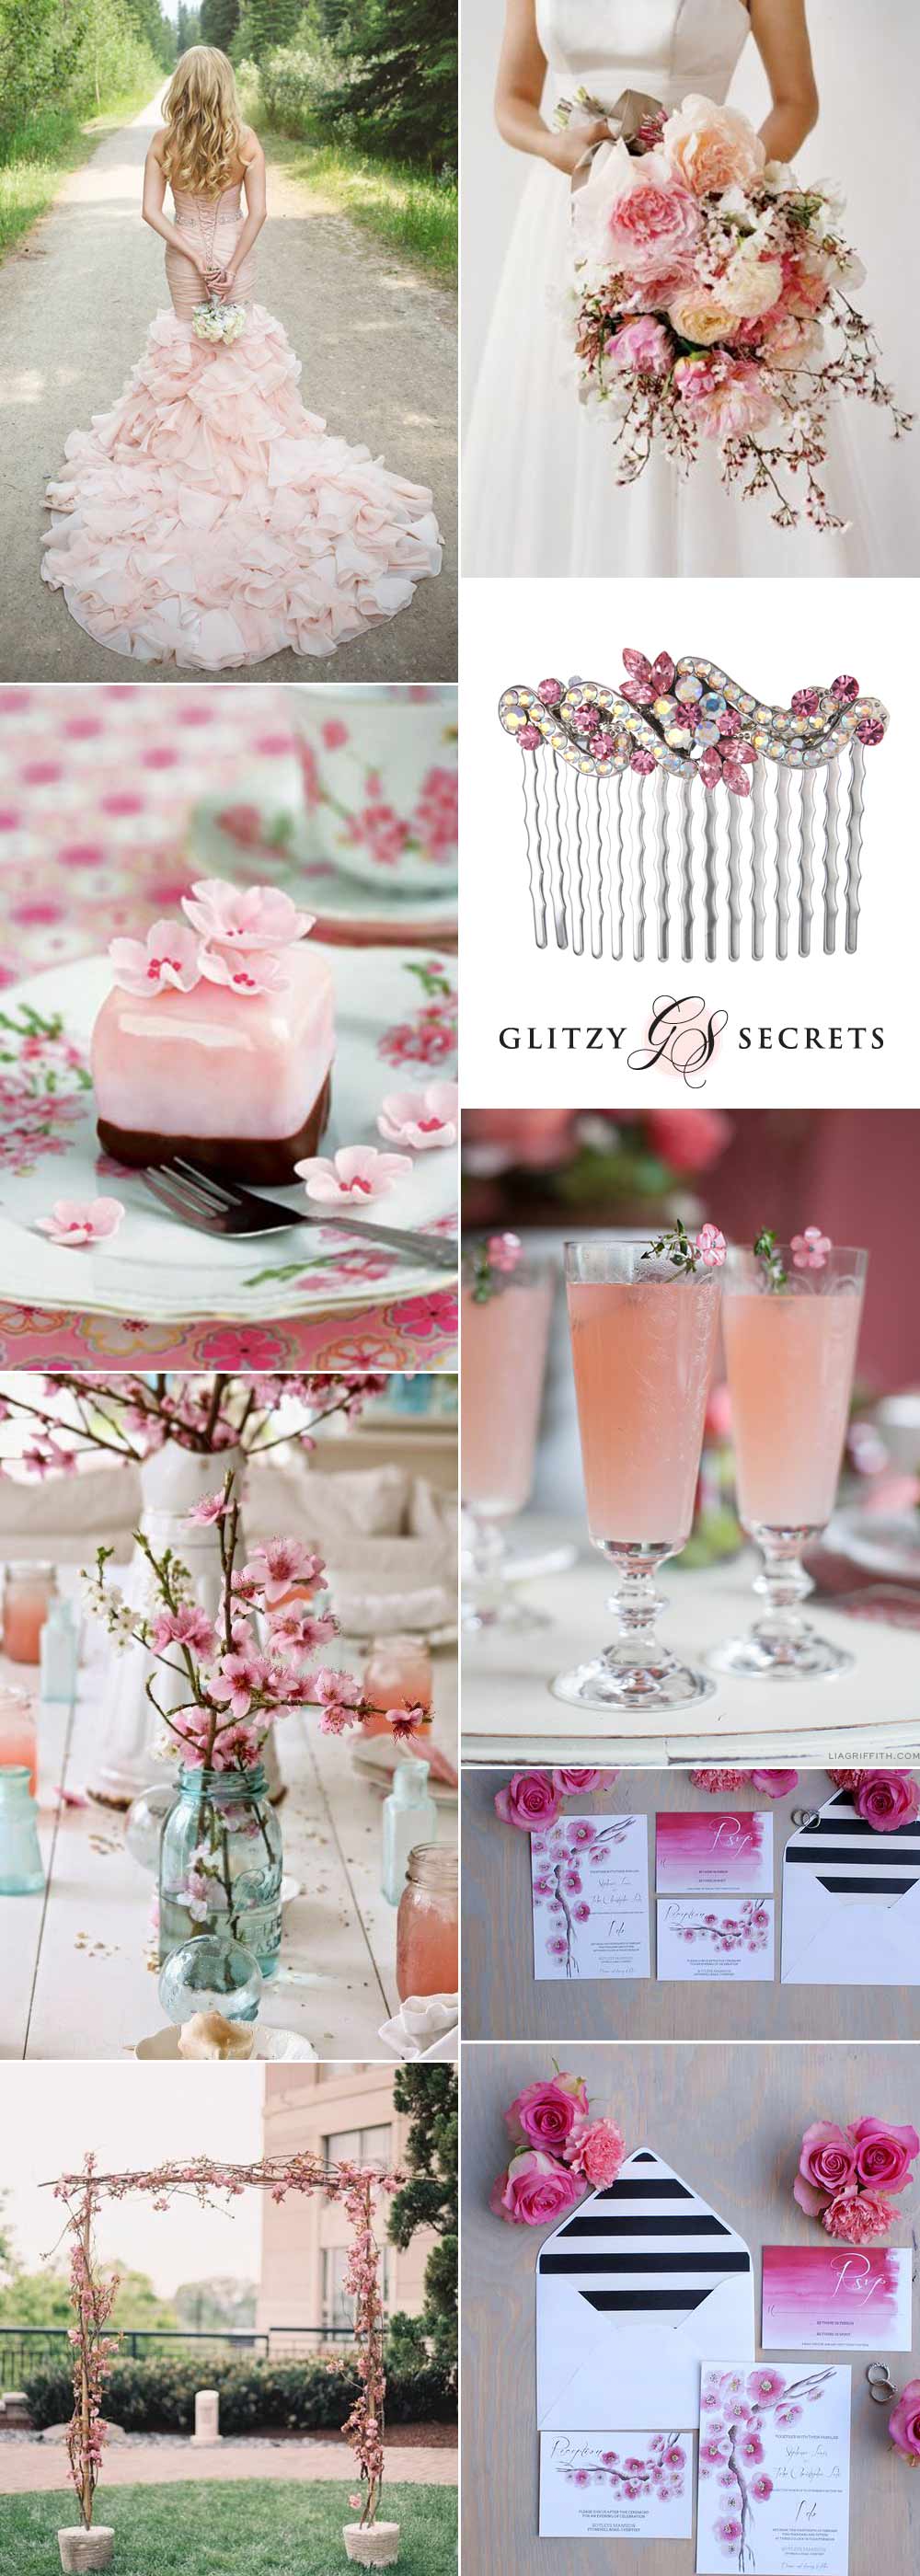 Delicate cherry blossom wedding inspiration